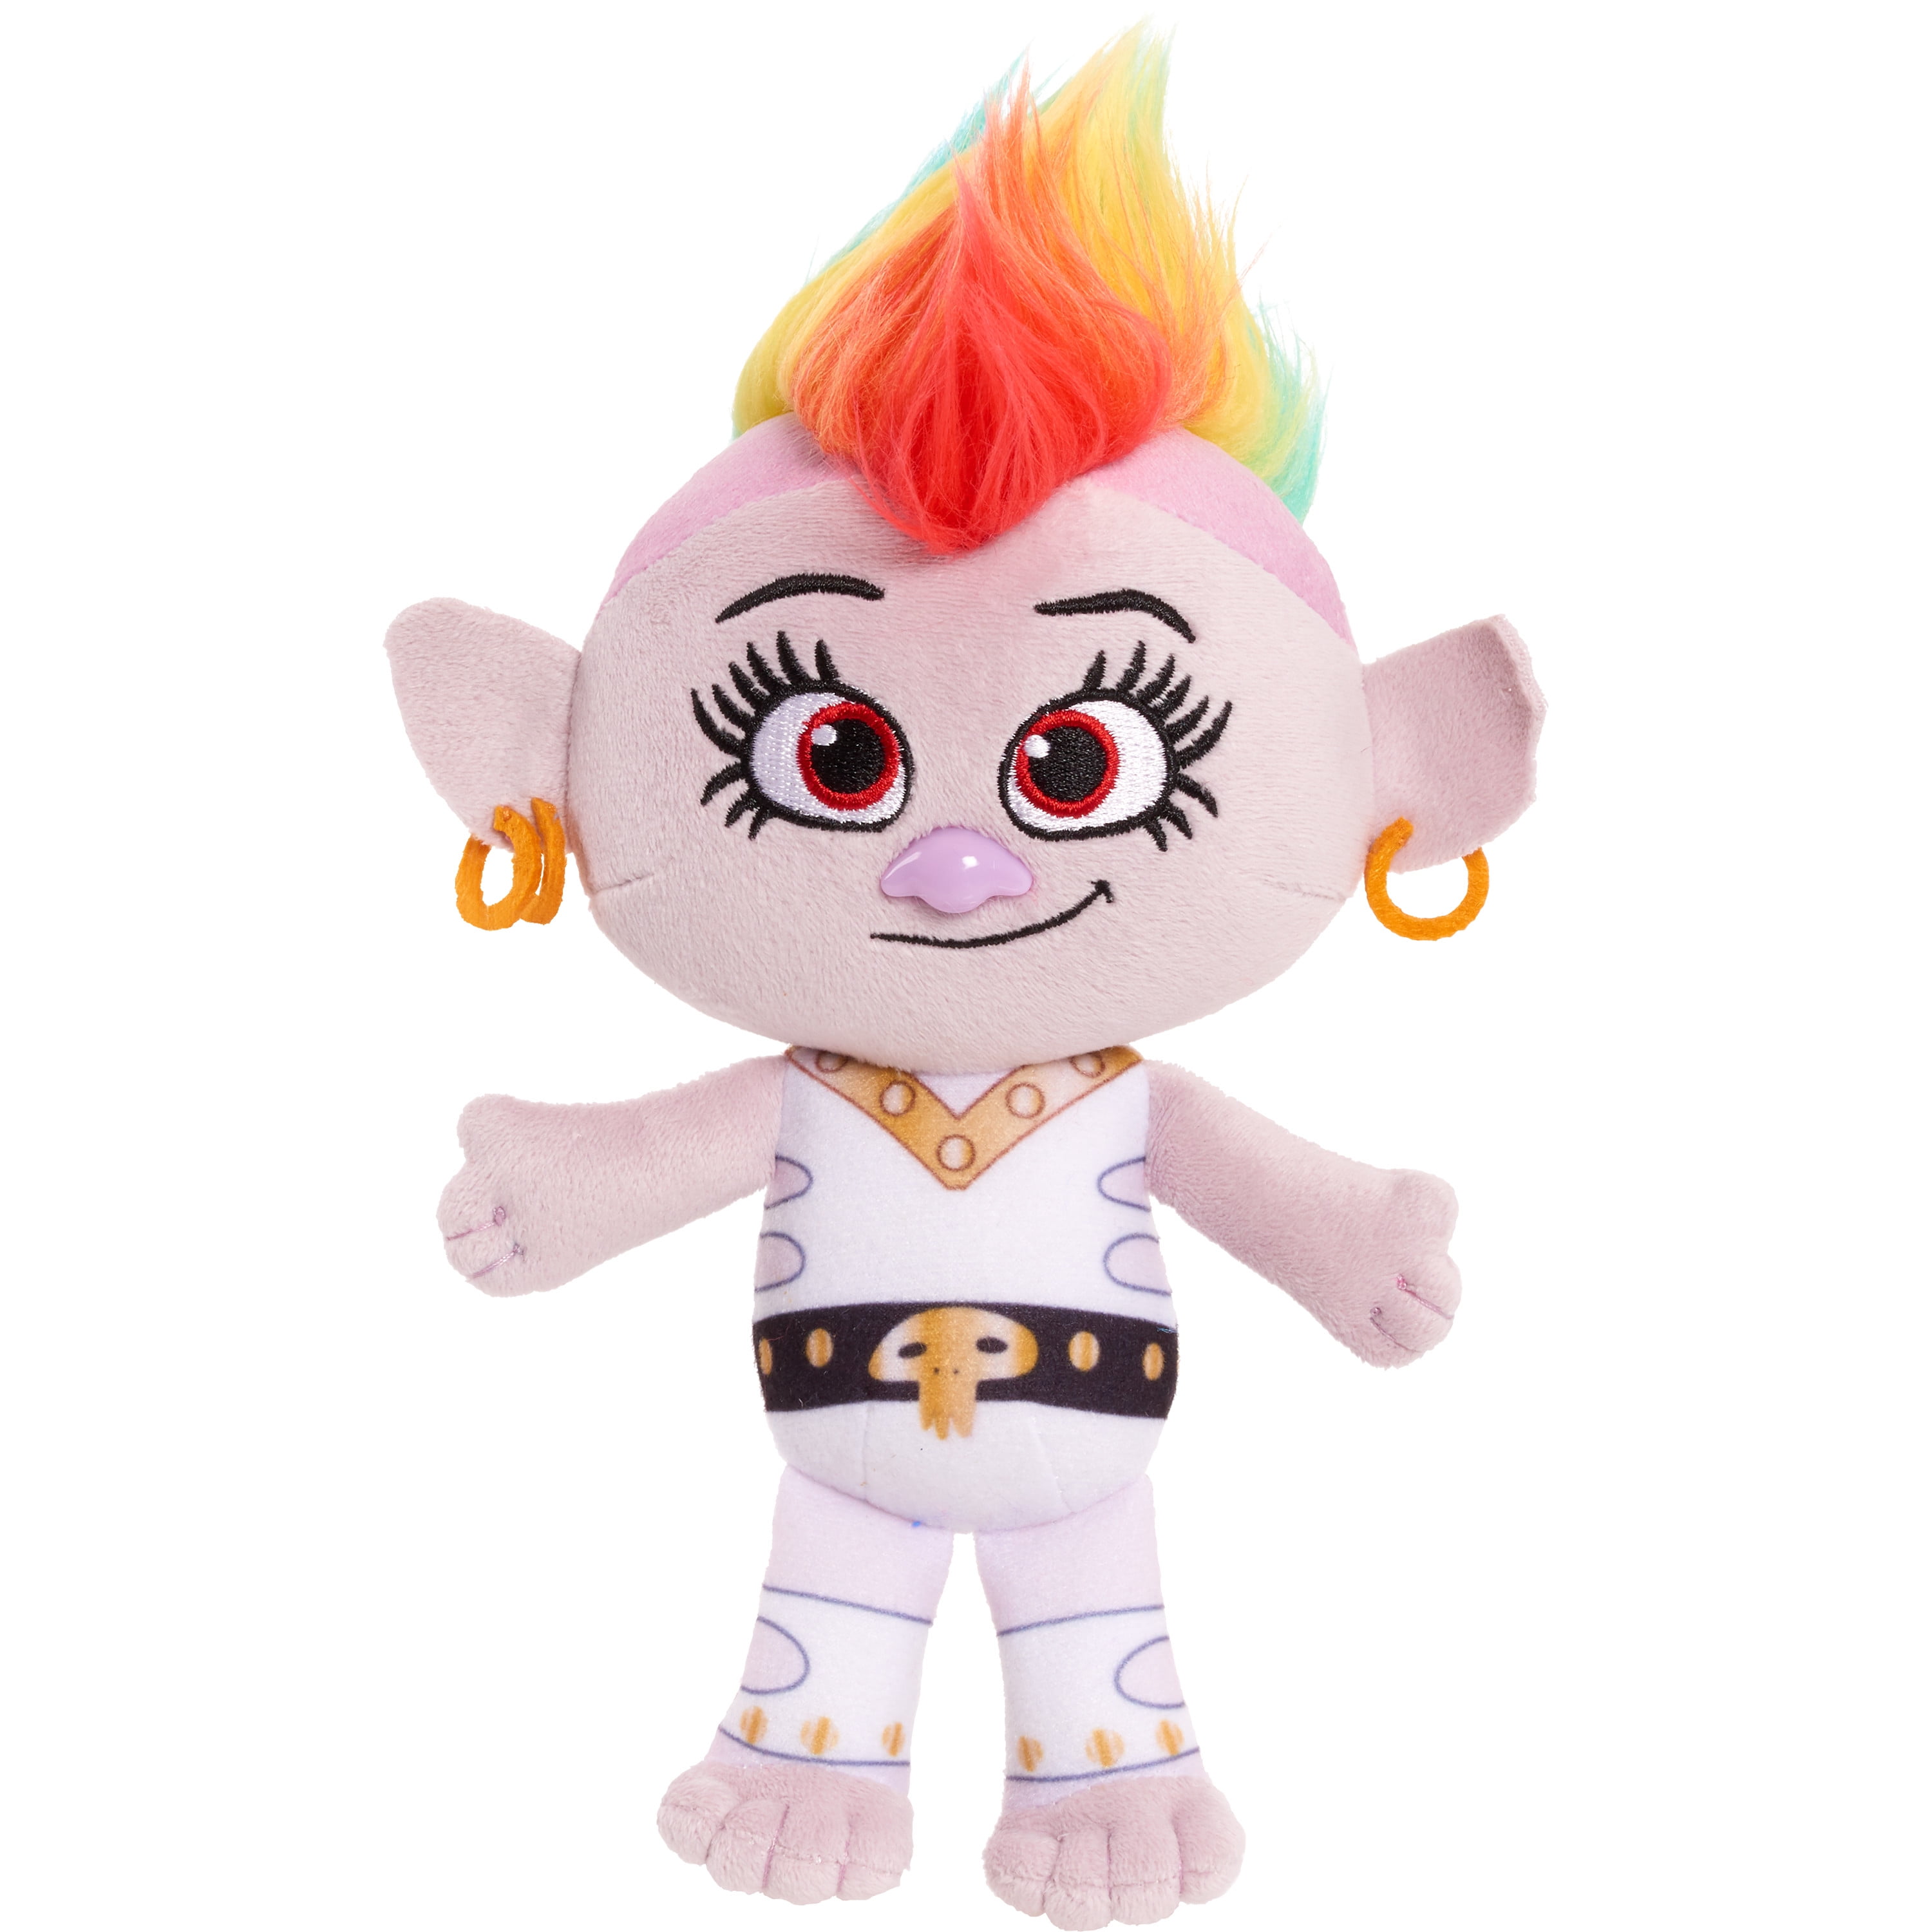 Dreamworks Movie Trolls World Tour POPPY BRANCH BARB Plush Doll Toy Kids Gift